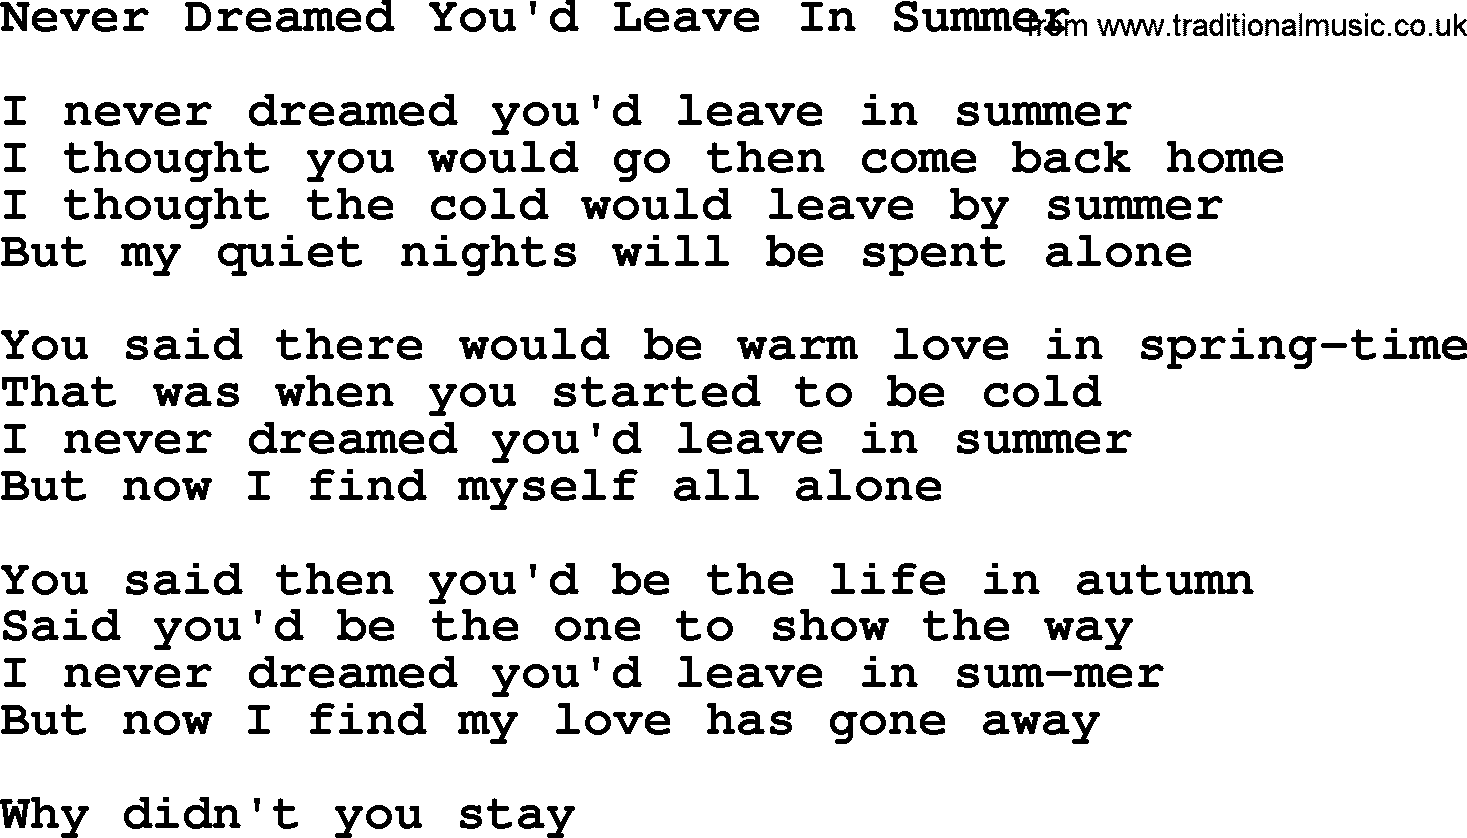 Joan Baez song Never Dreamed You'd Leave In Summer, lyrics